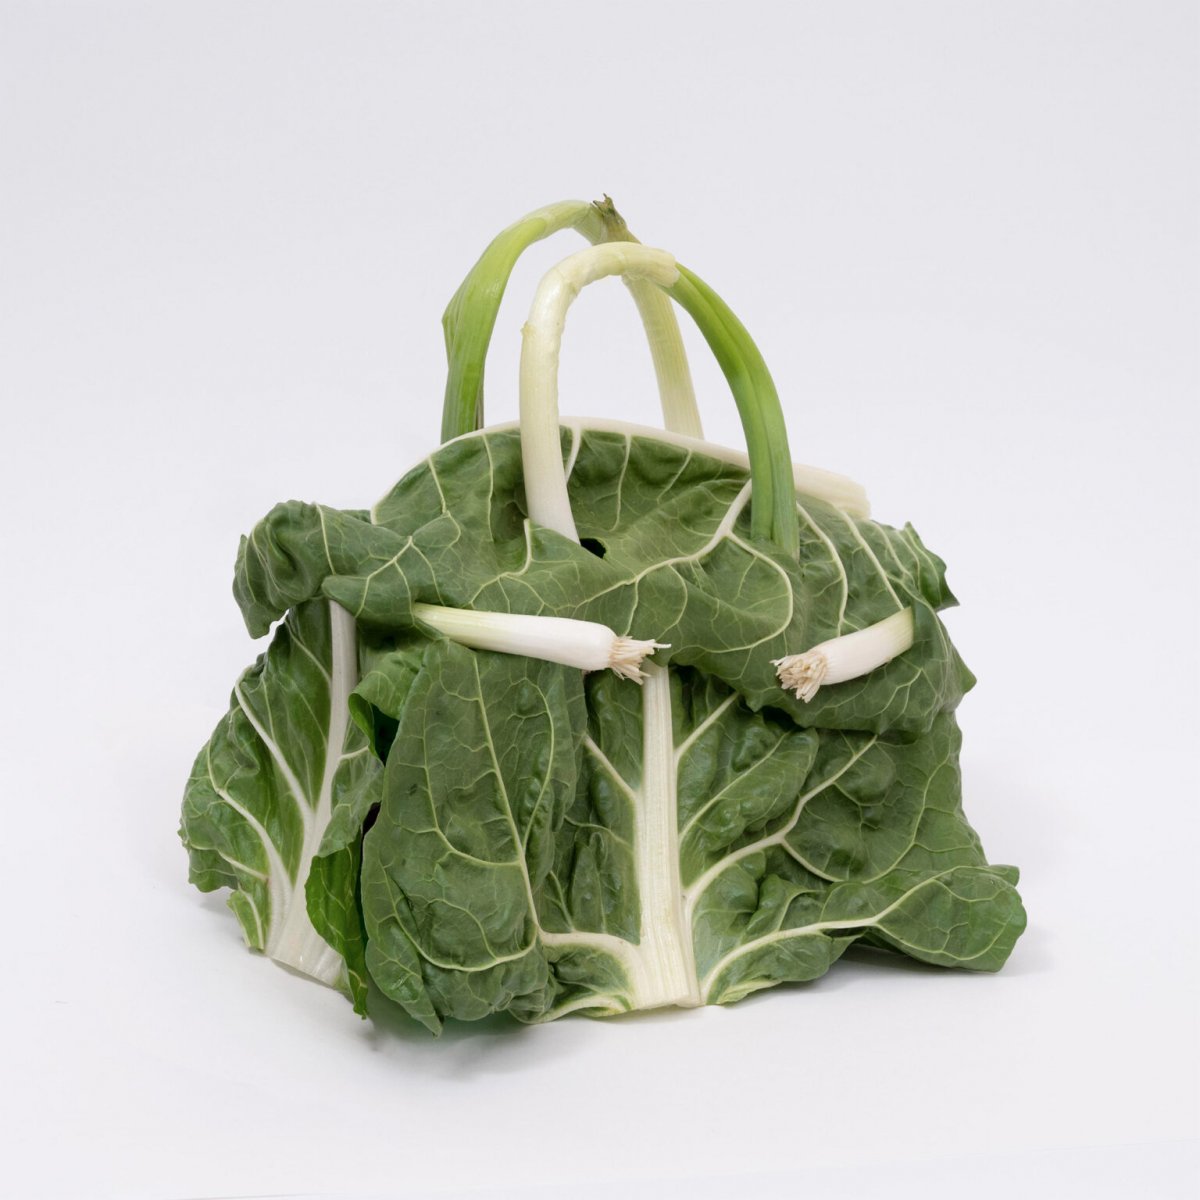 Birkin Bags In Vegetable Versions By Ben Denzer 1